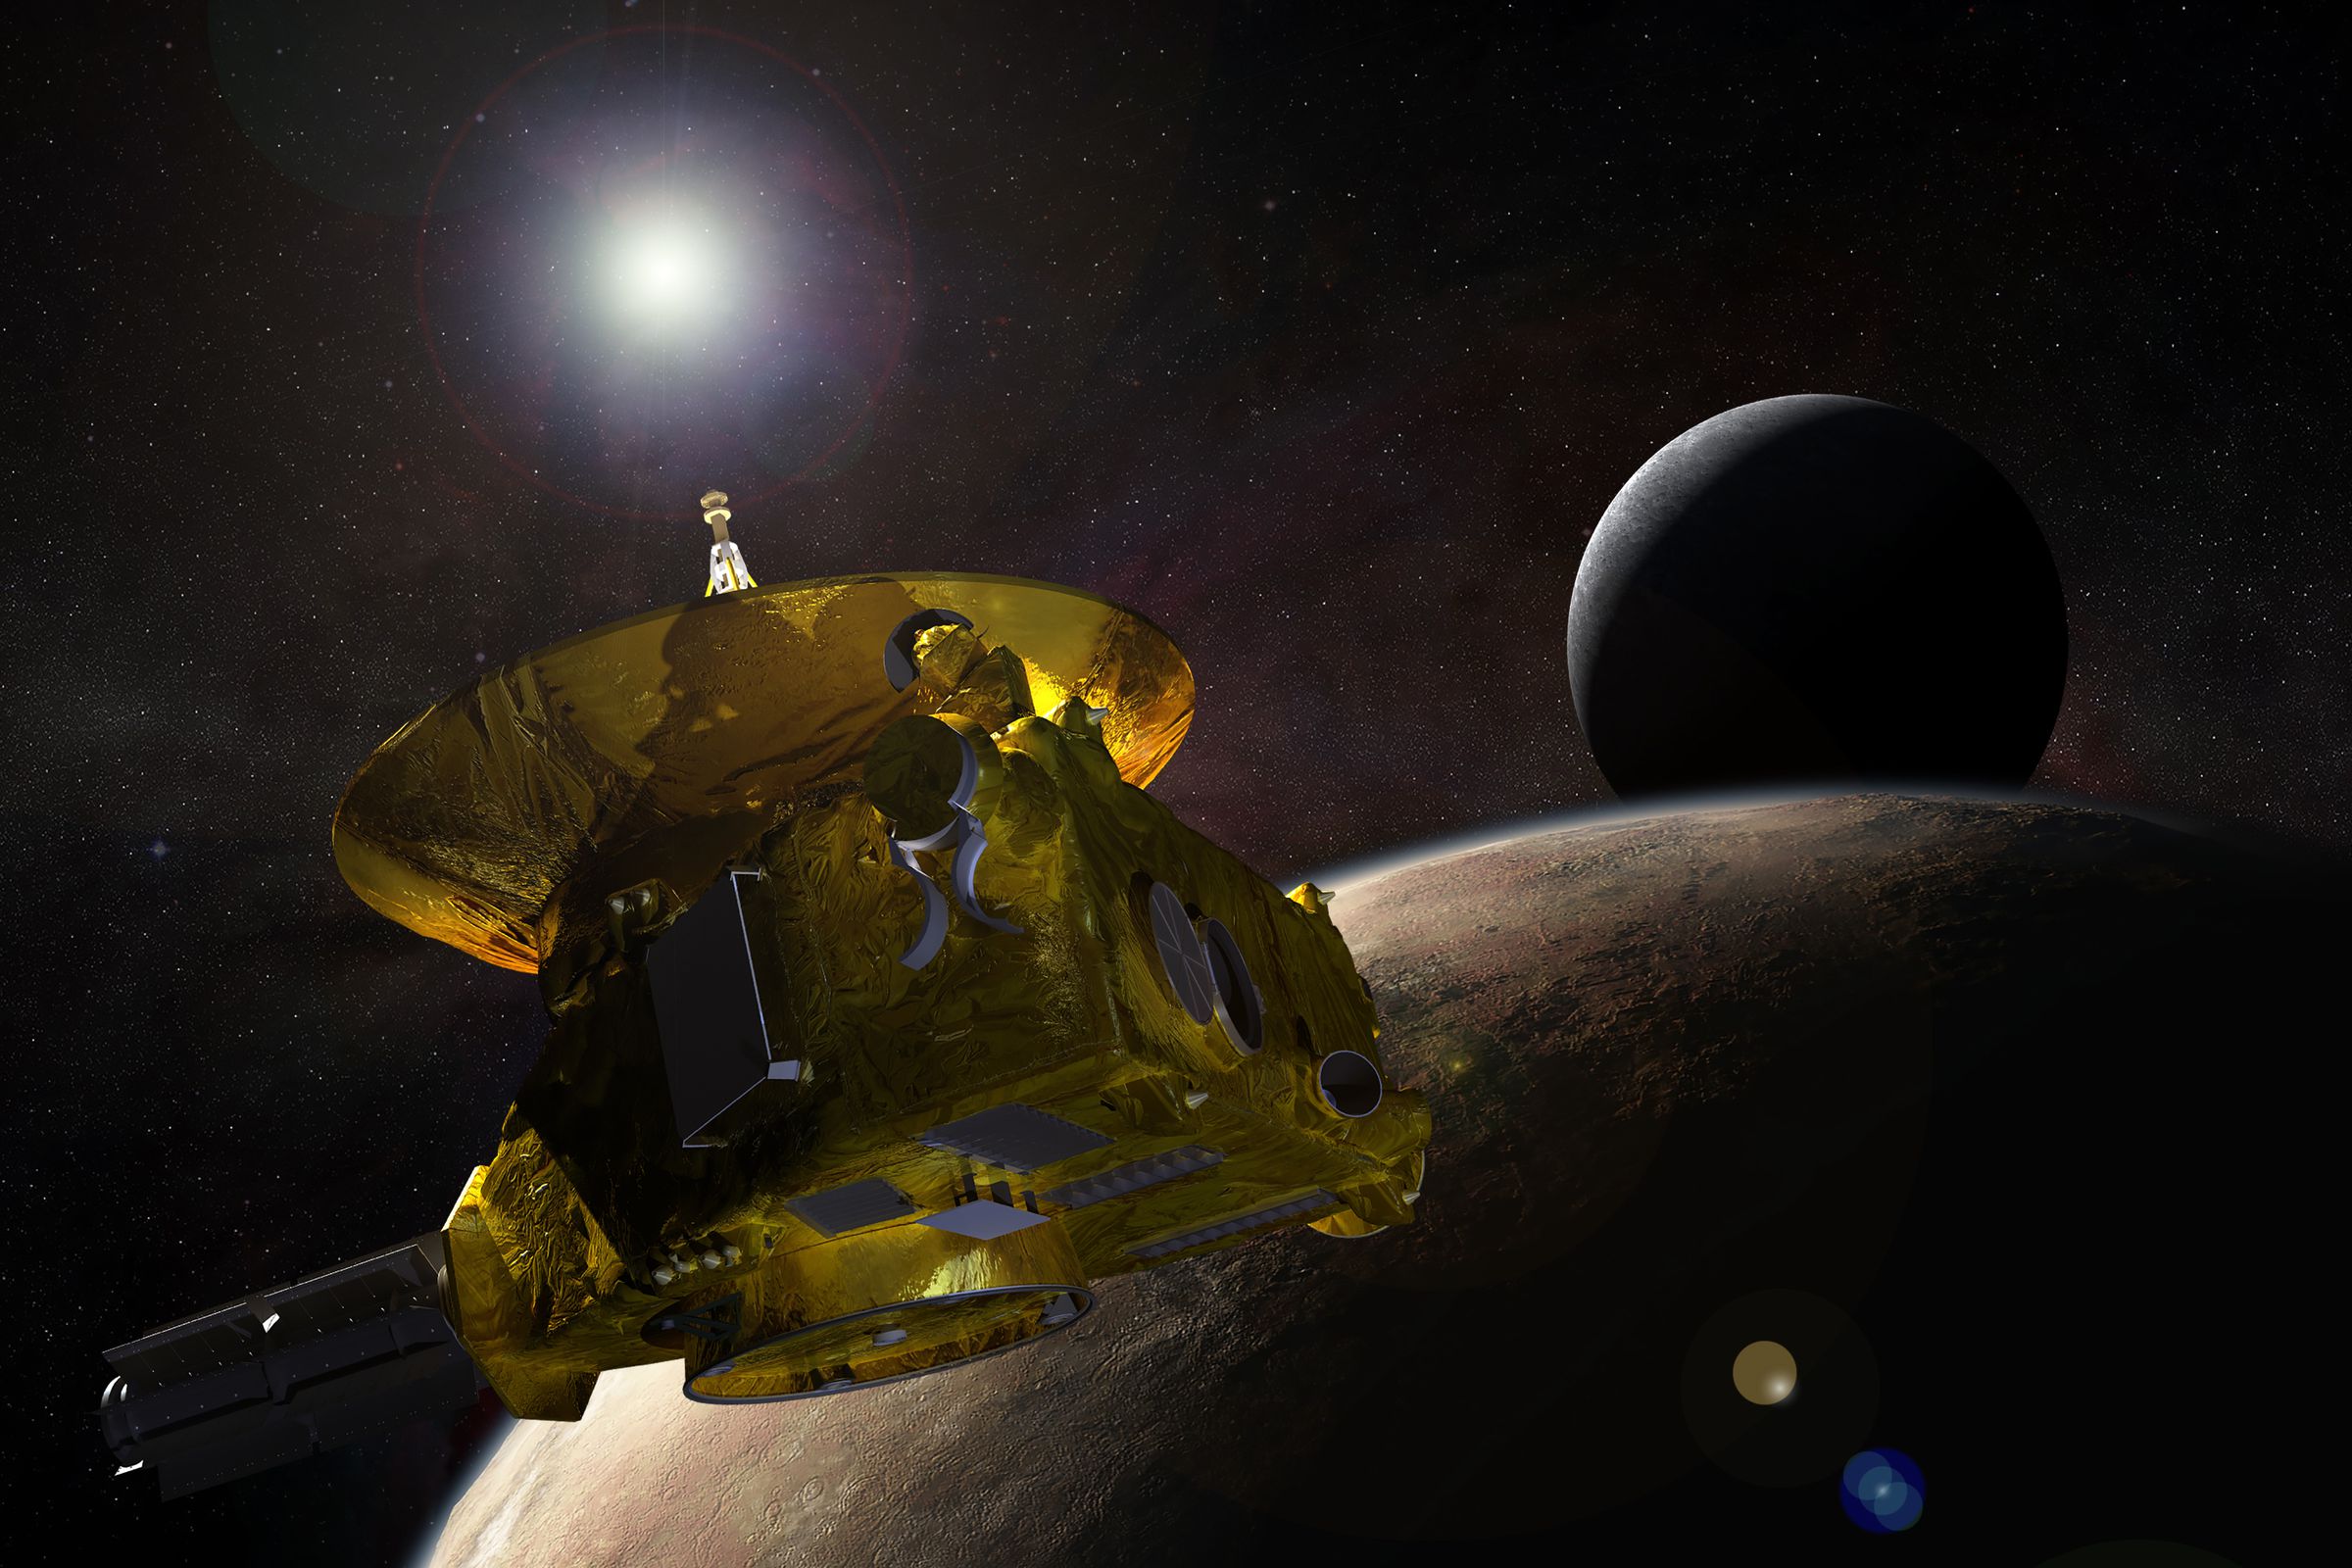 An artistic rendering of NASA’s New Horizons spacecraft